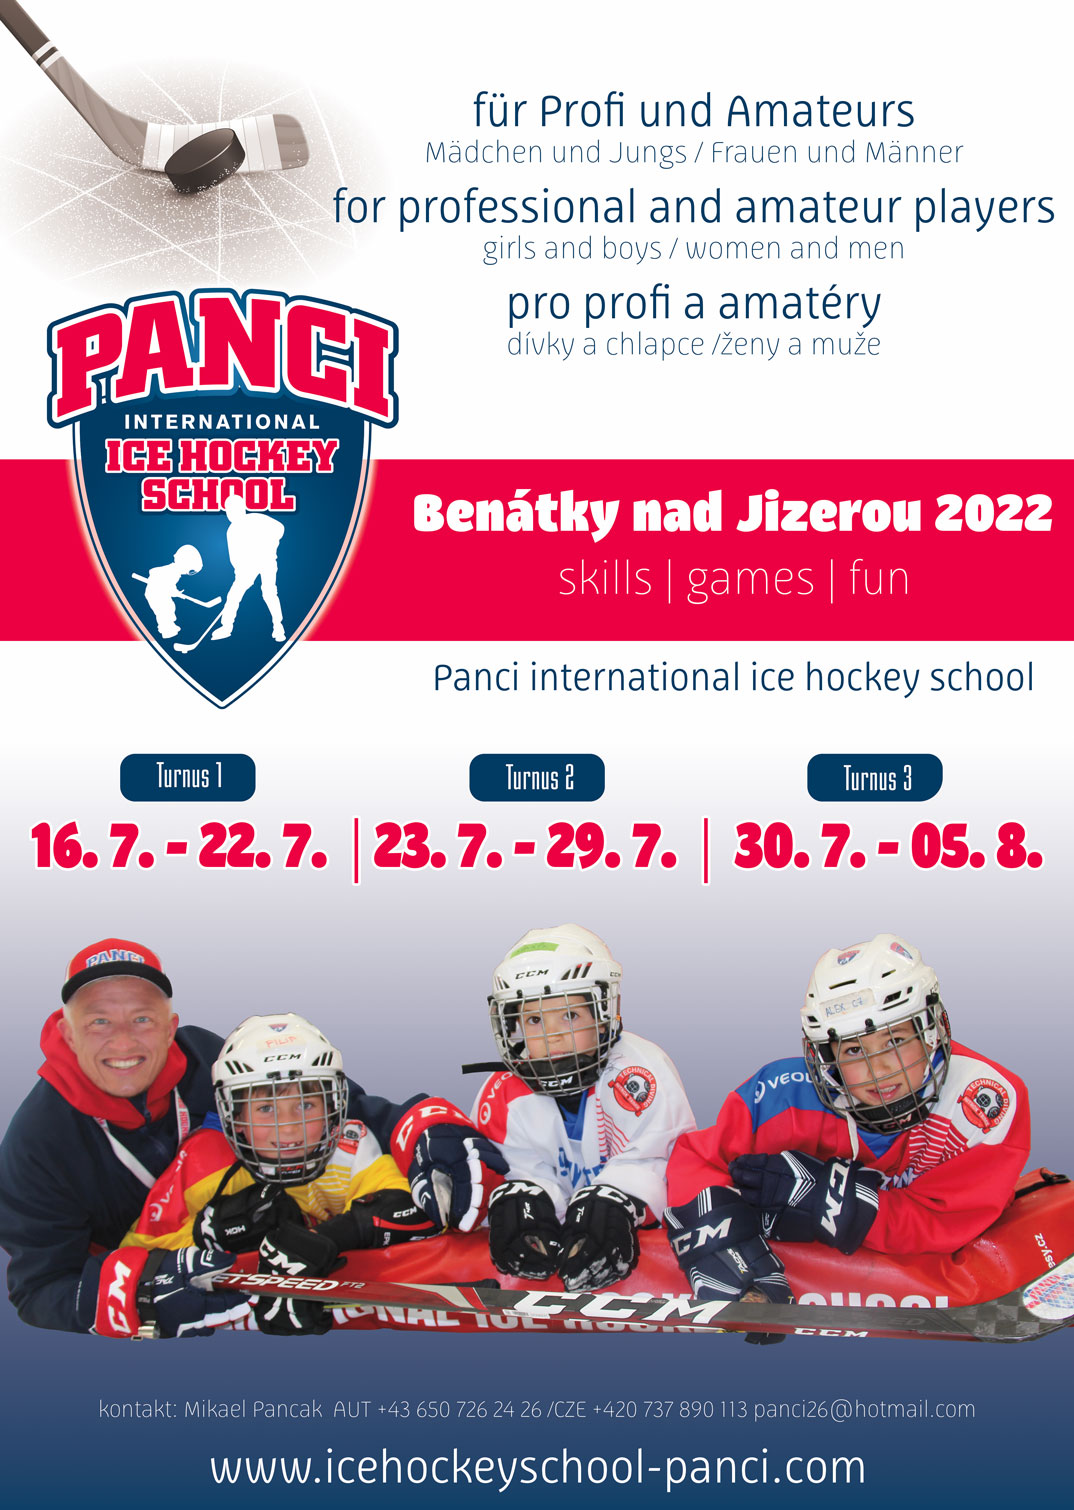 Sommer Eishockey Schule in Benatky nad Jizerou 2022